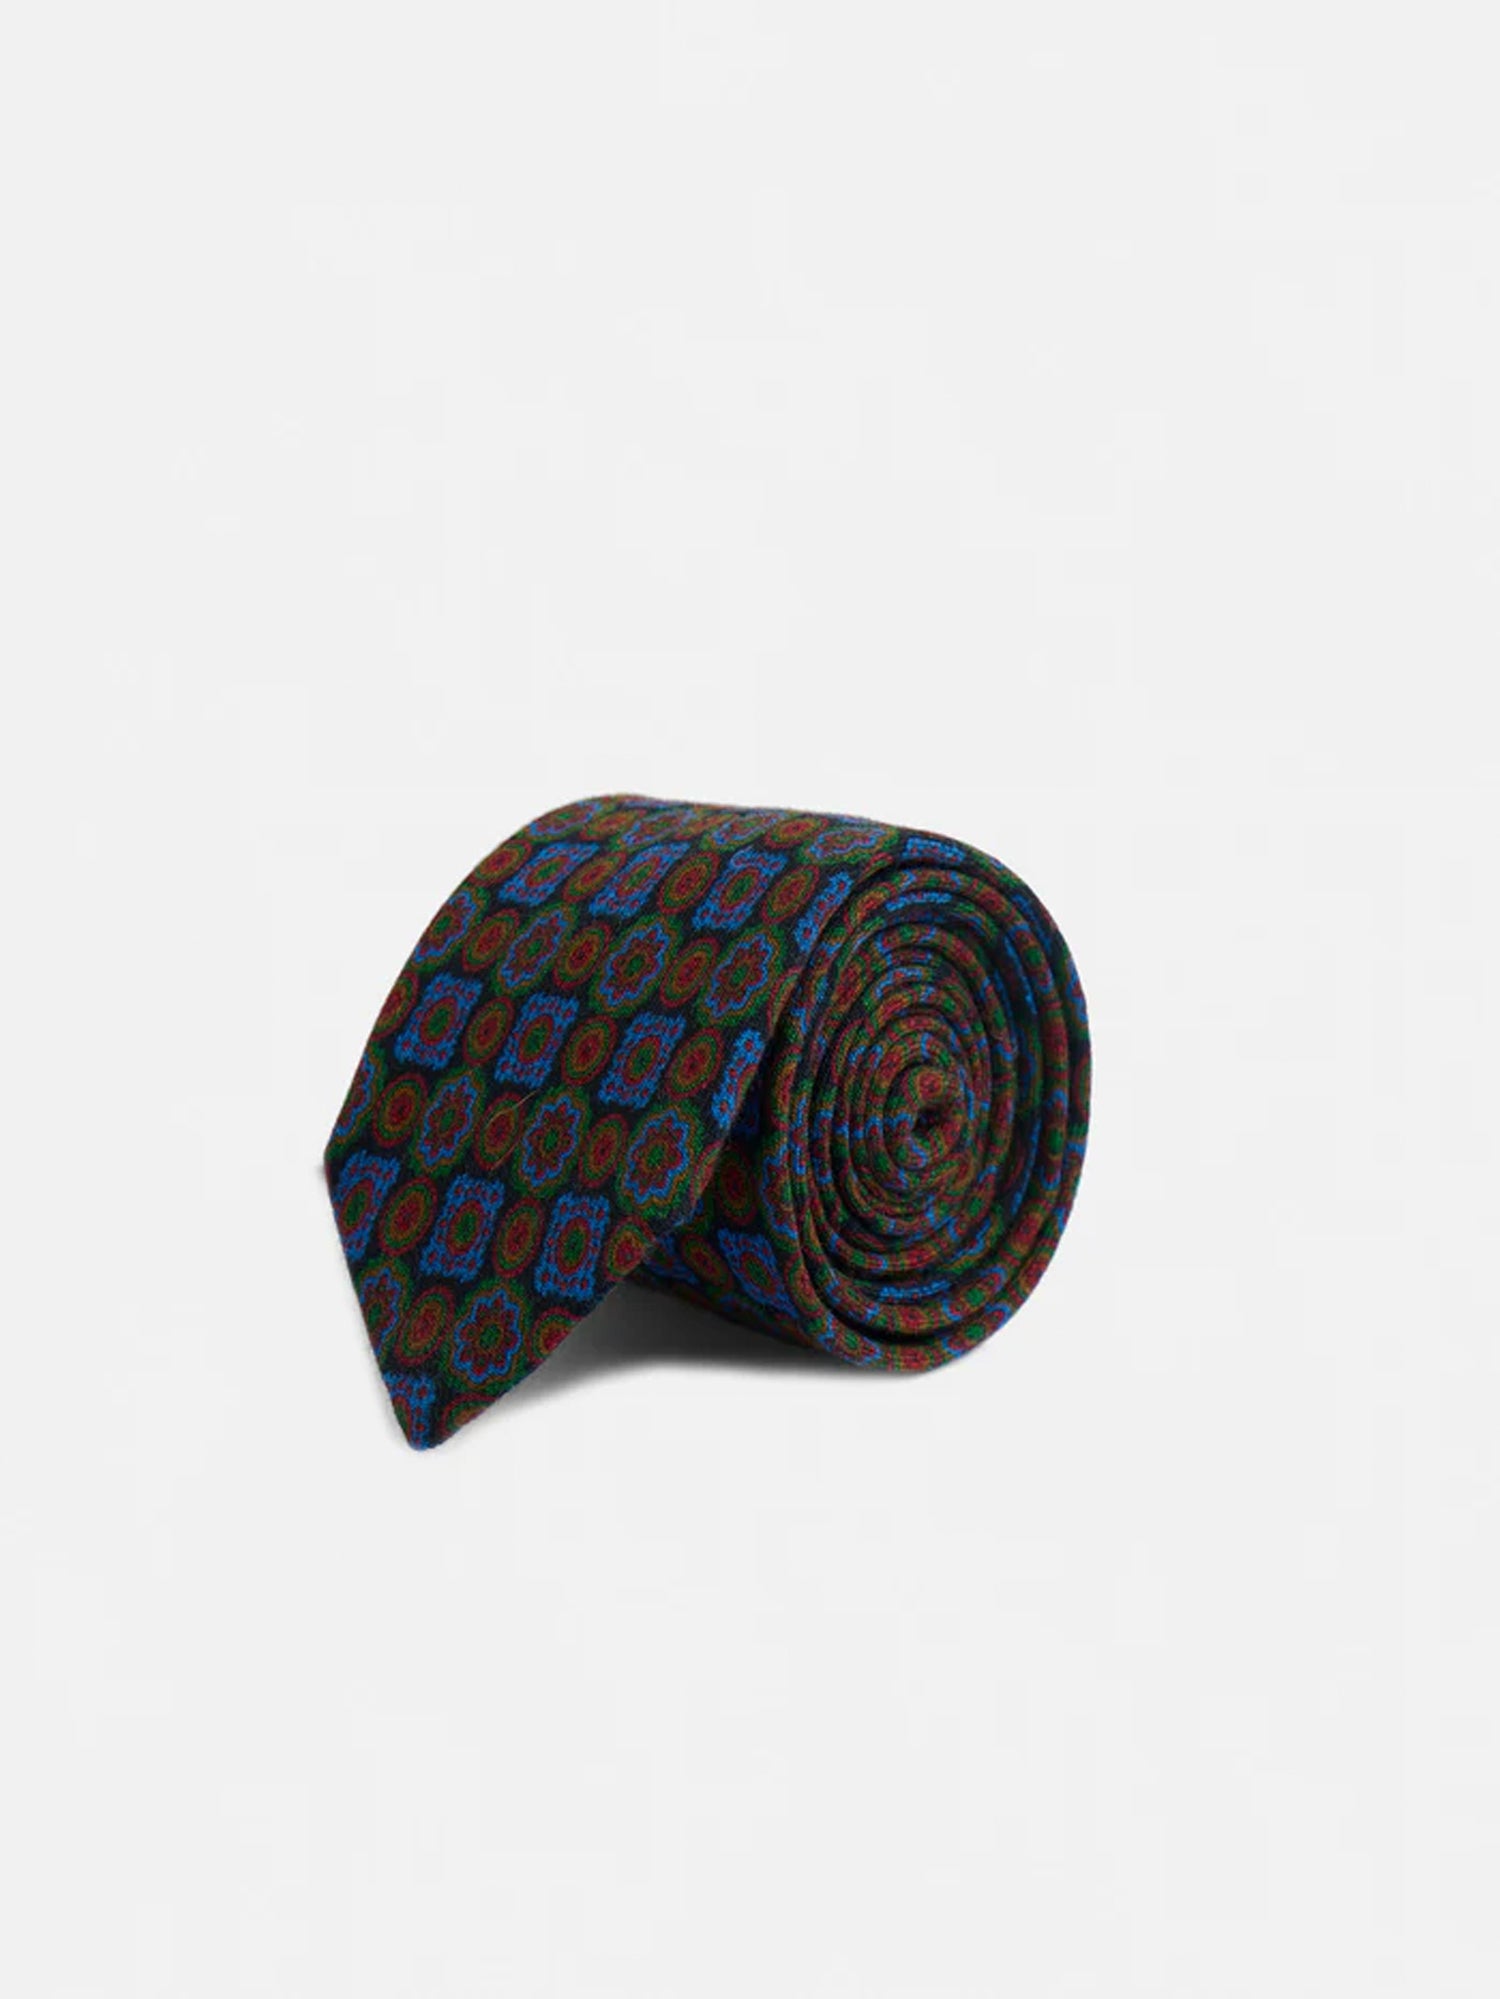 Navy blue geometric tie